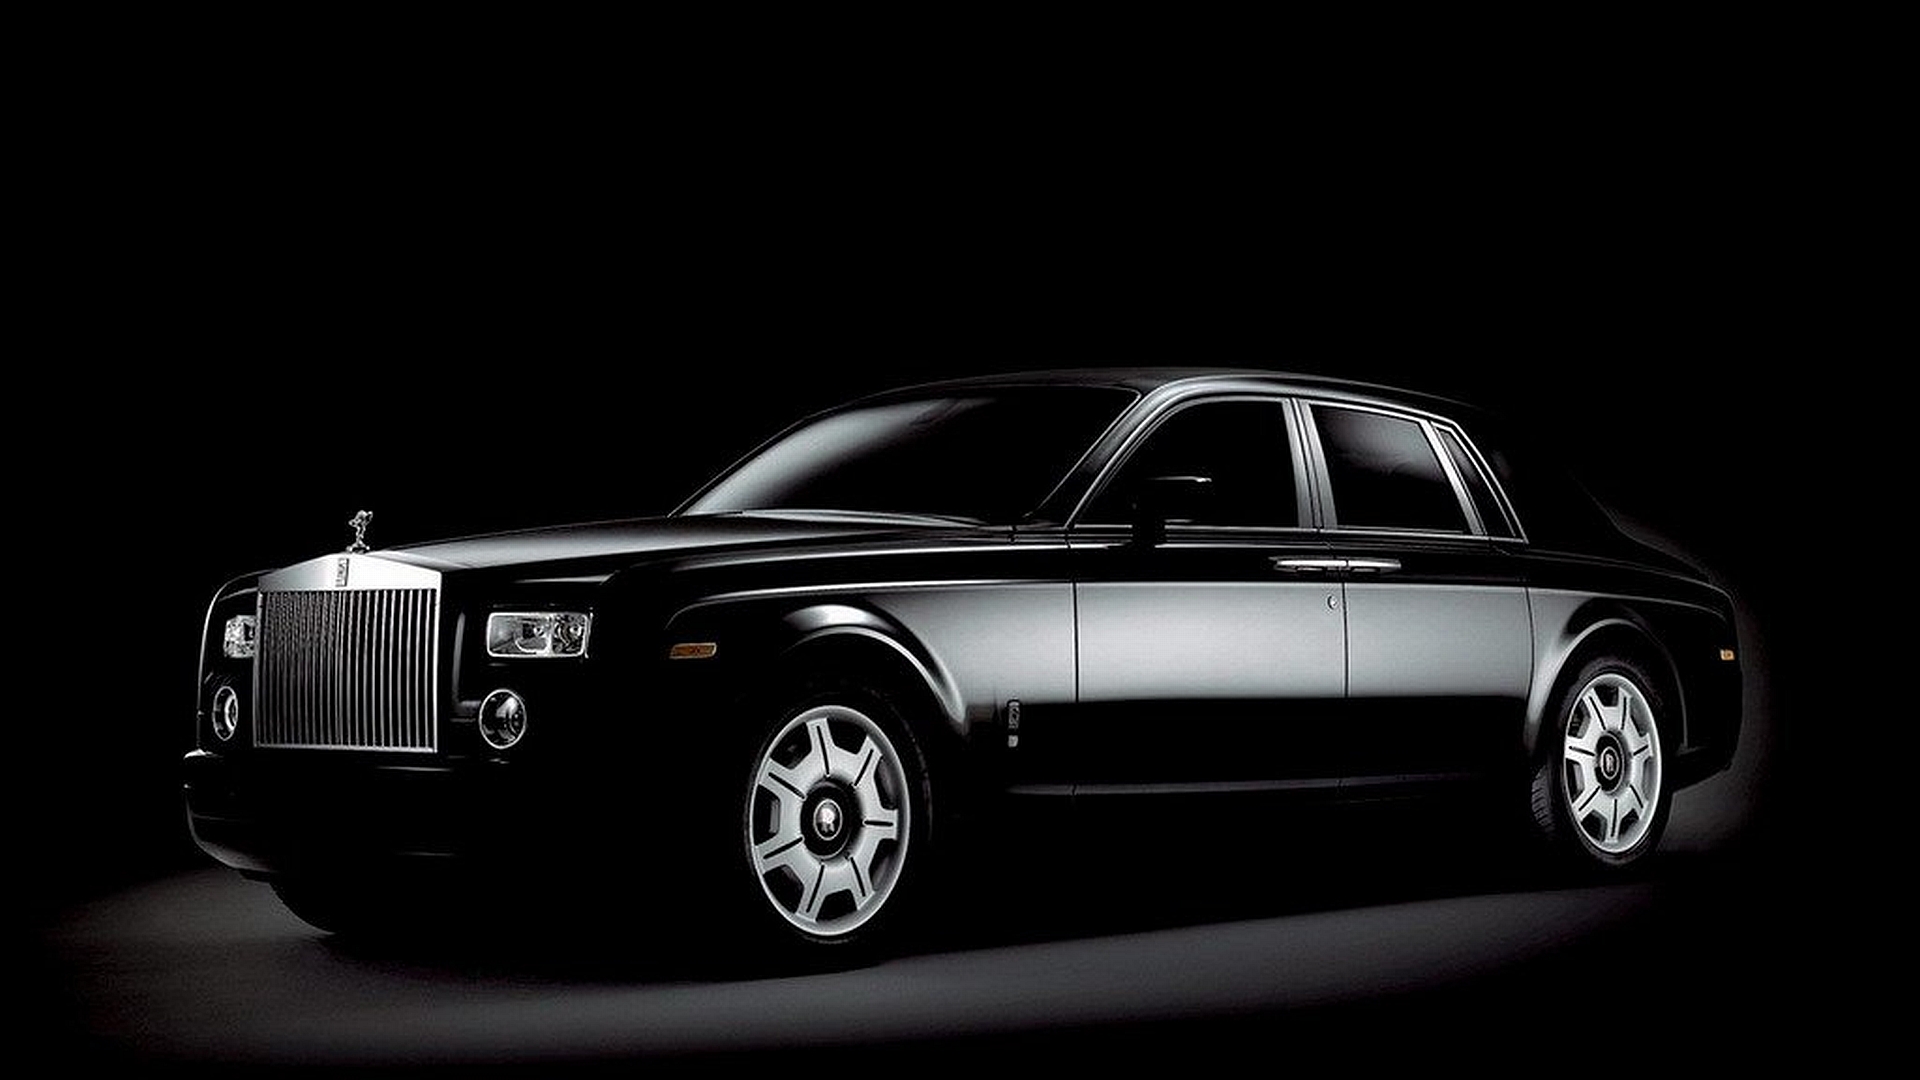 Luxurious Rolls-Royce parked in scenic landscape.